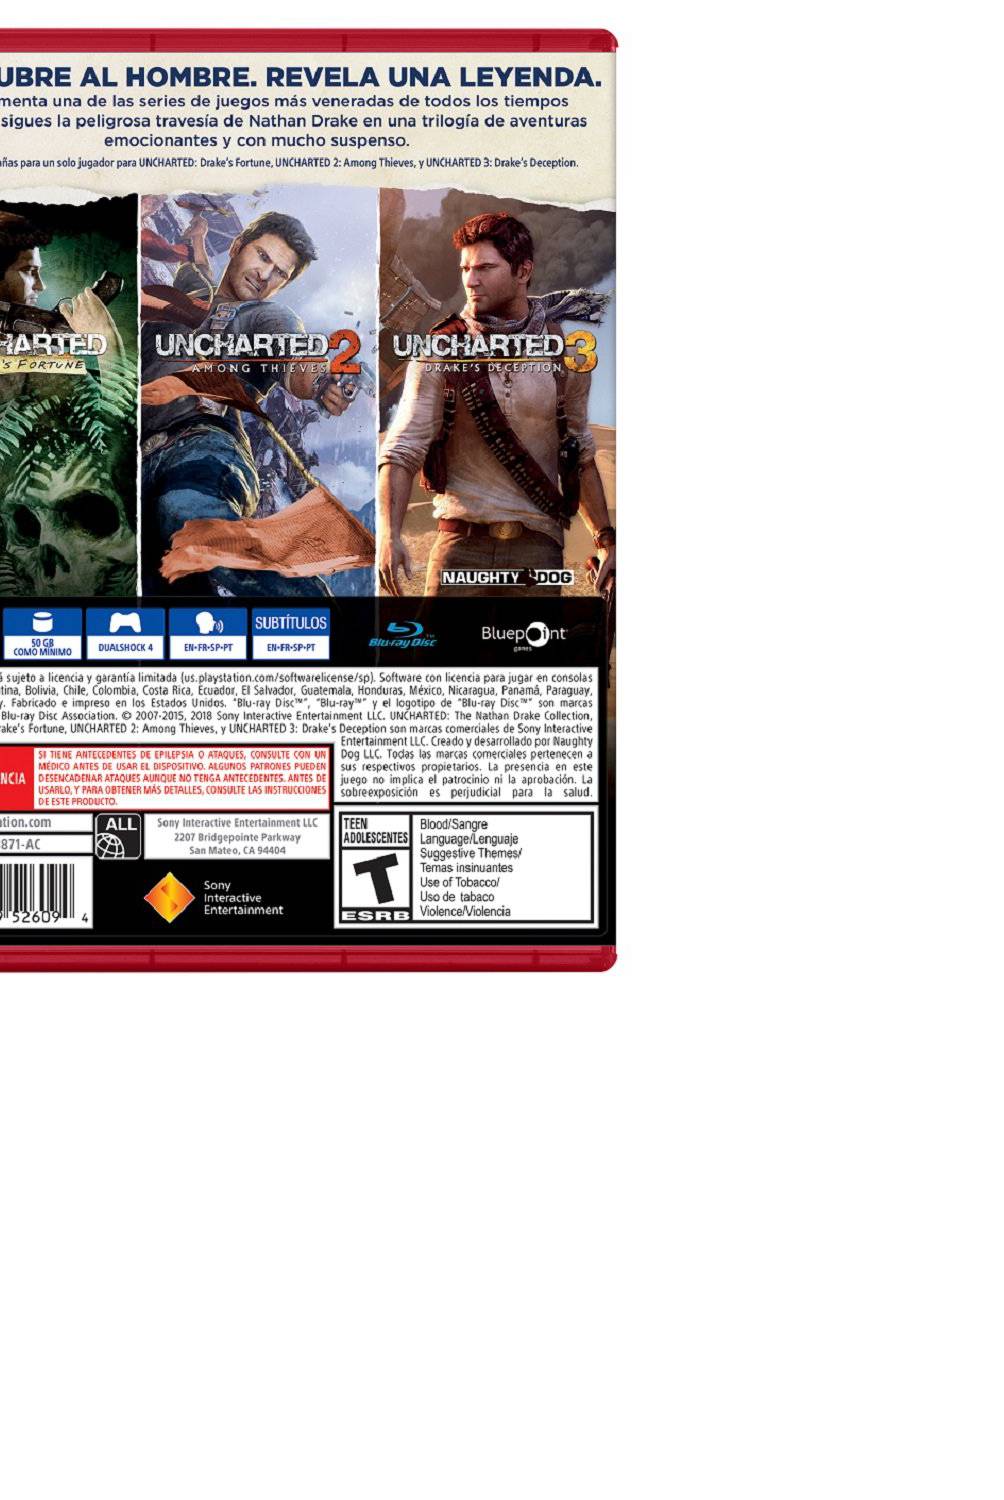 PLAYSTATION - Juego PS4 Uncharted: The Nathan Drake Collection